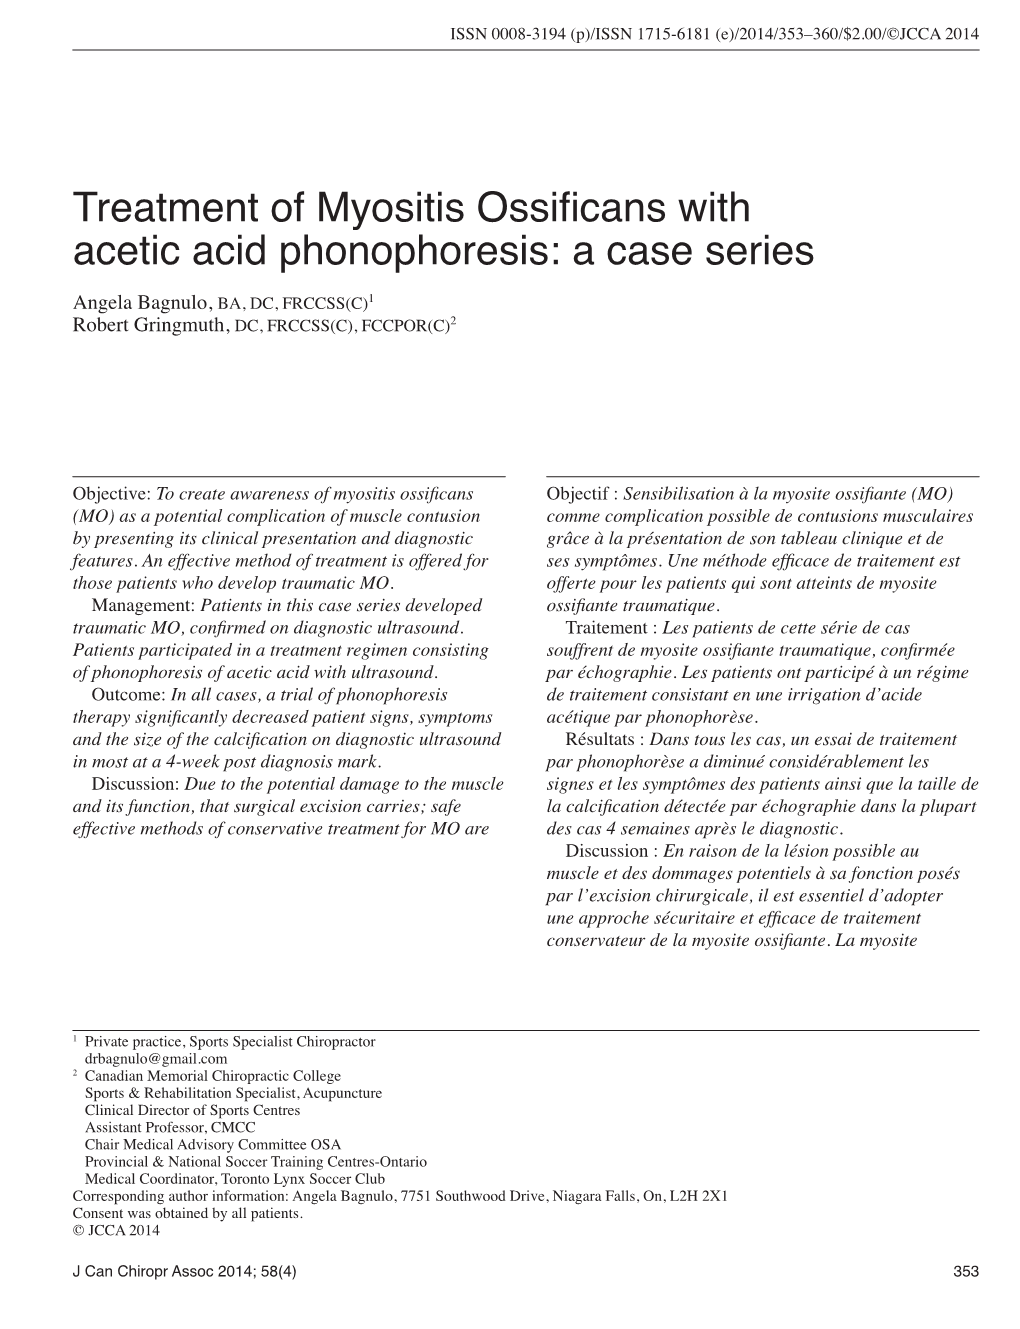 Treatment of Myositis Ossificans with Acetic Acid Phonophoresis: a Case Series Angela Bagnulo, BA, DC, FRCCSS(C)1 Robert Gringmuth, DC, FRCCSS(C), FCCPOR(C)2